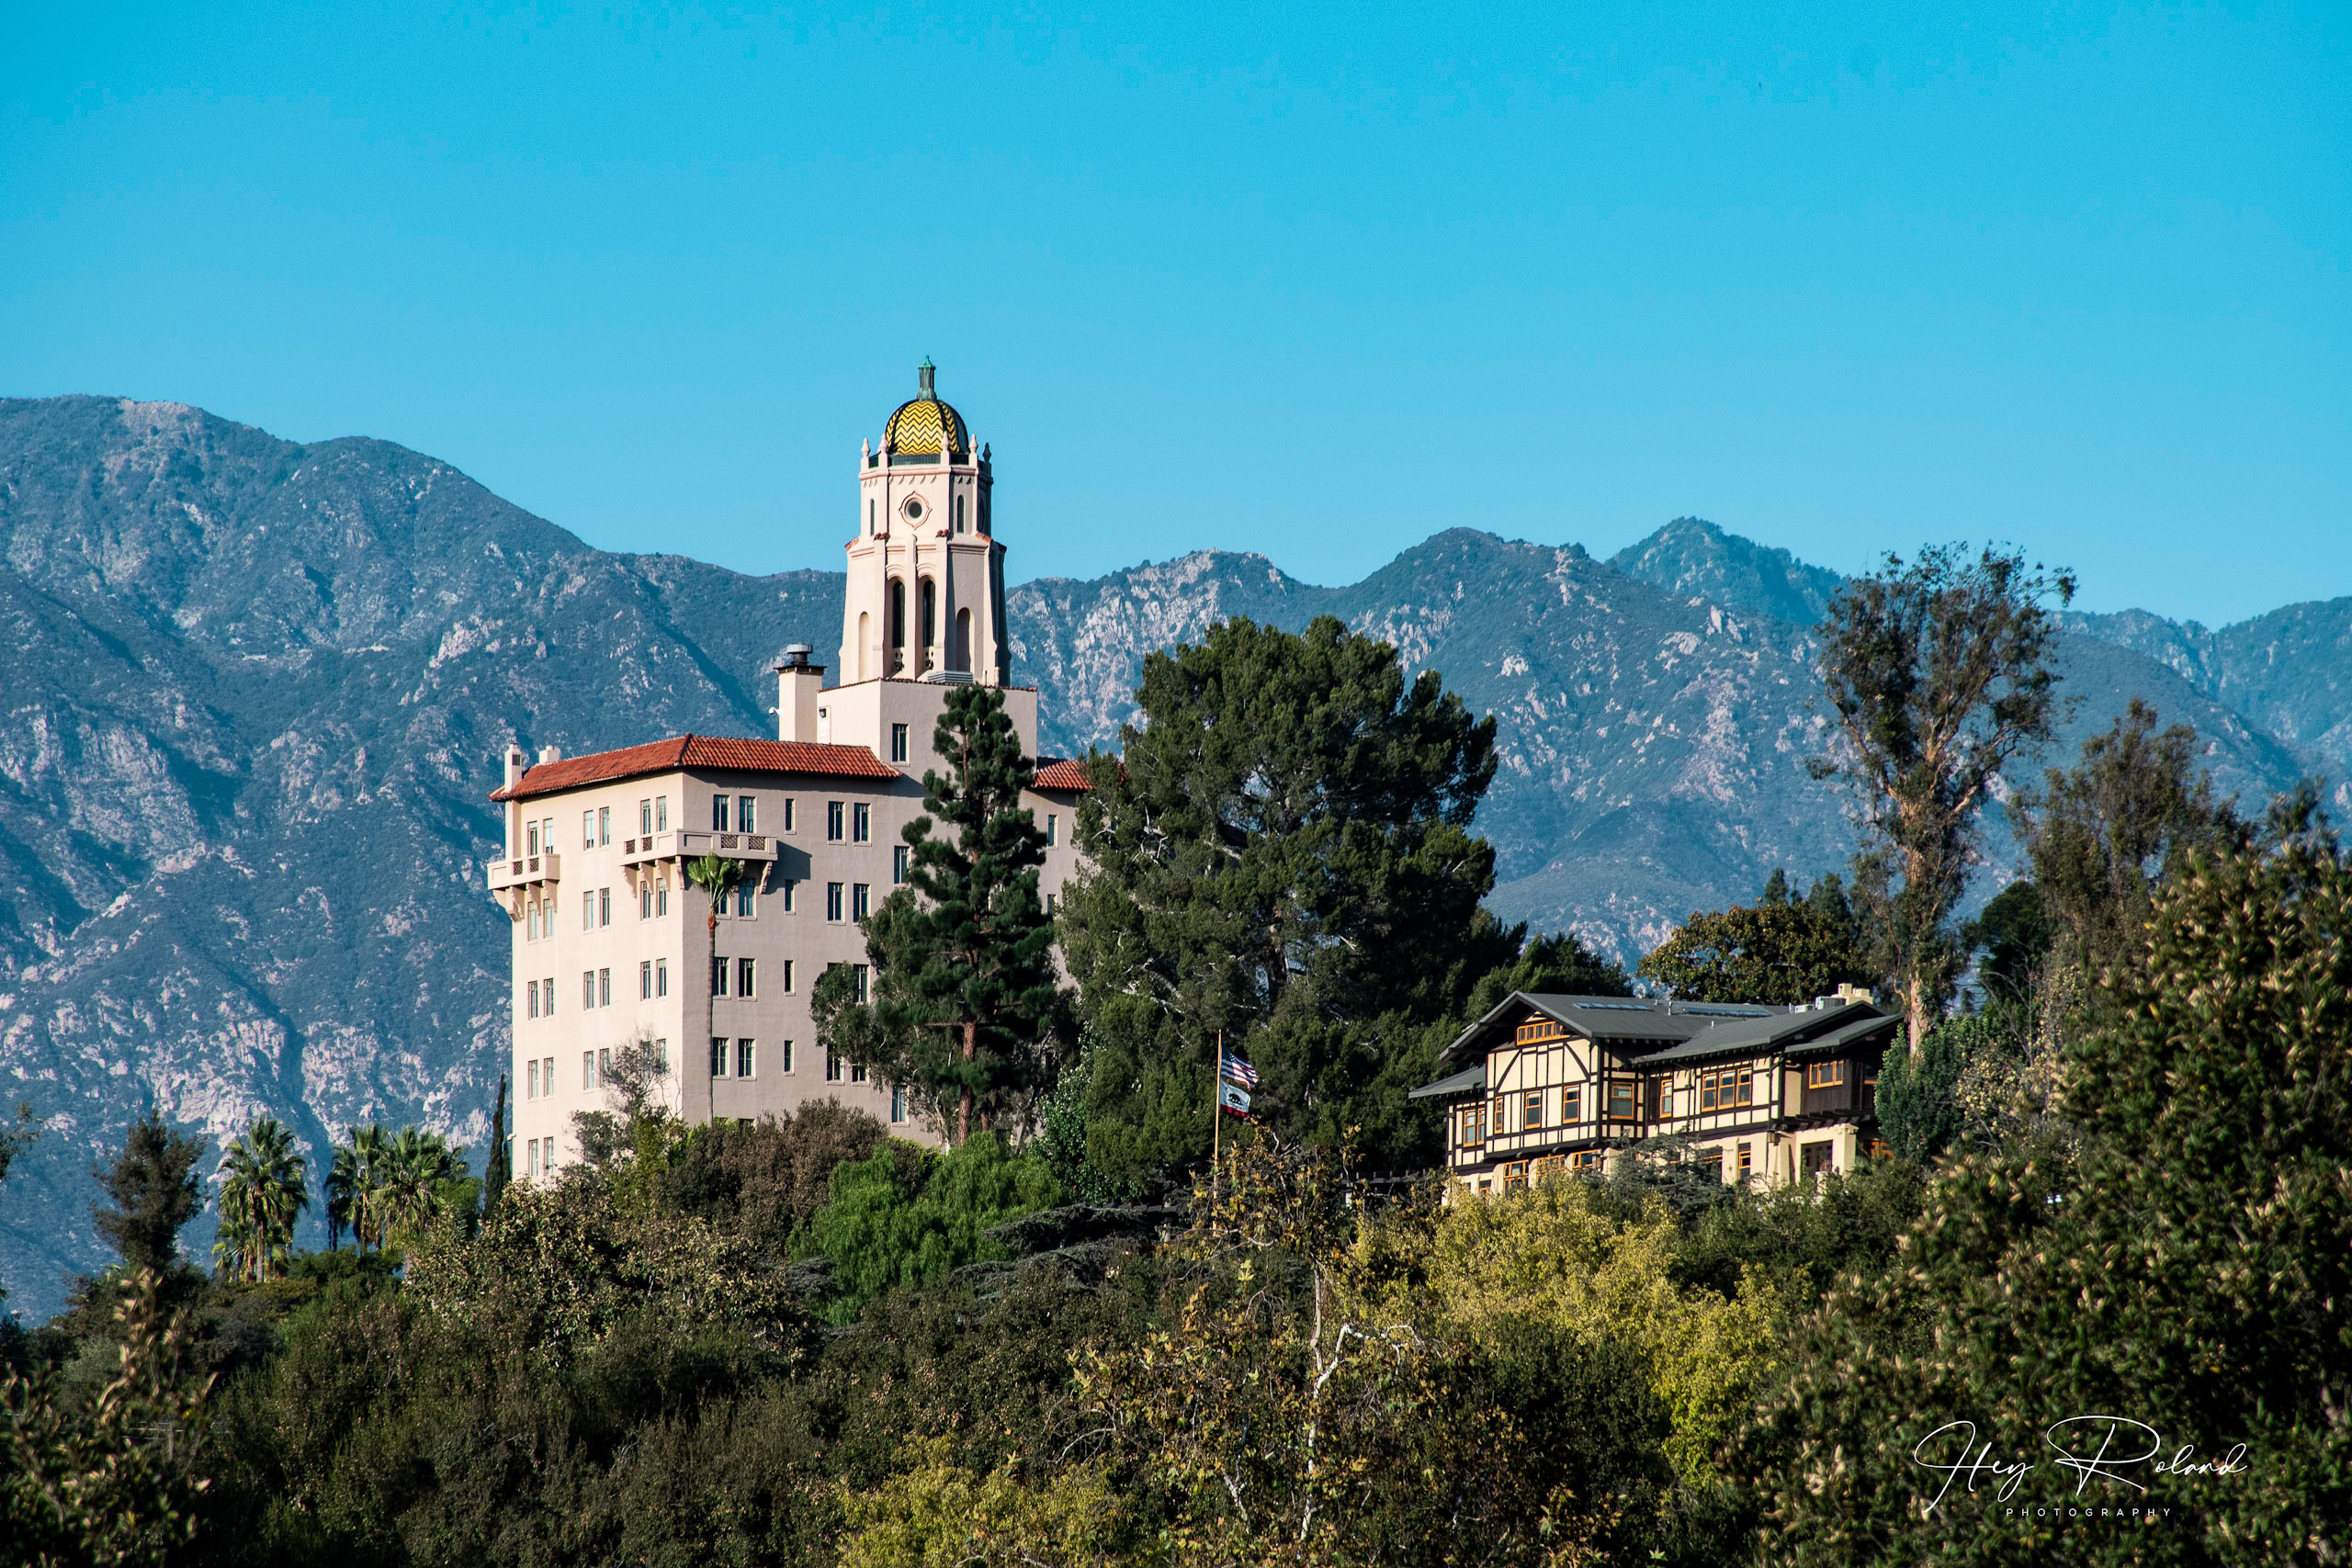 Pasadena boasts historic architecture and wondrous nature